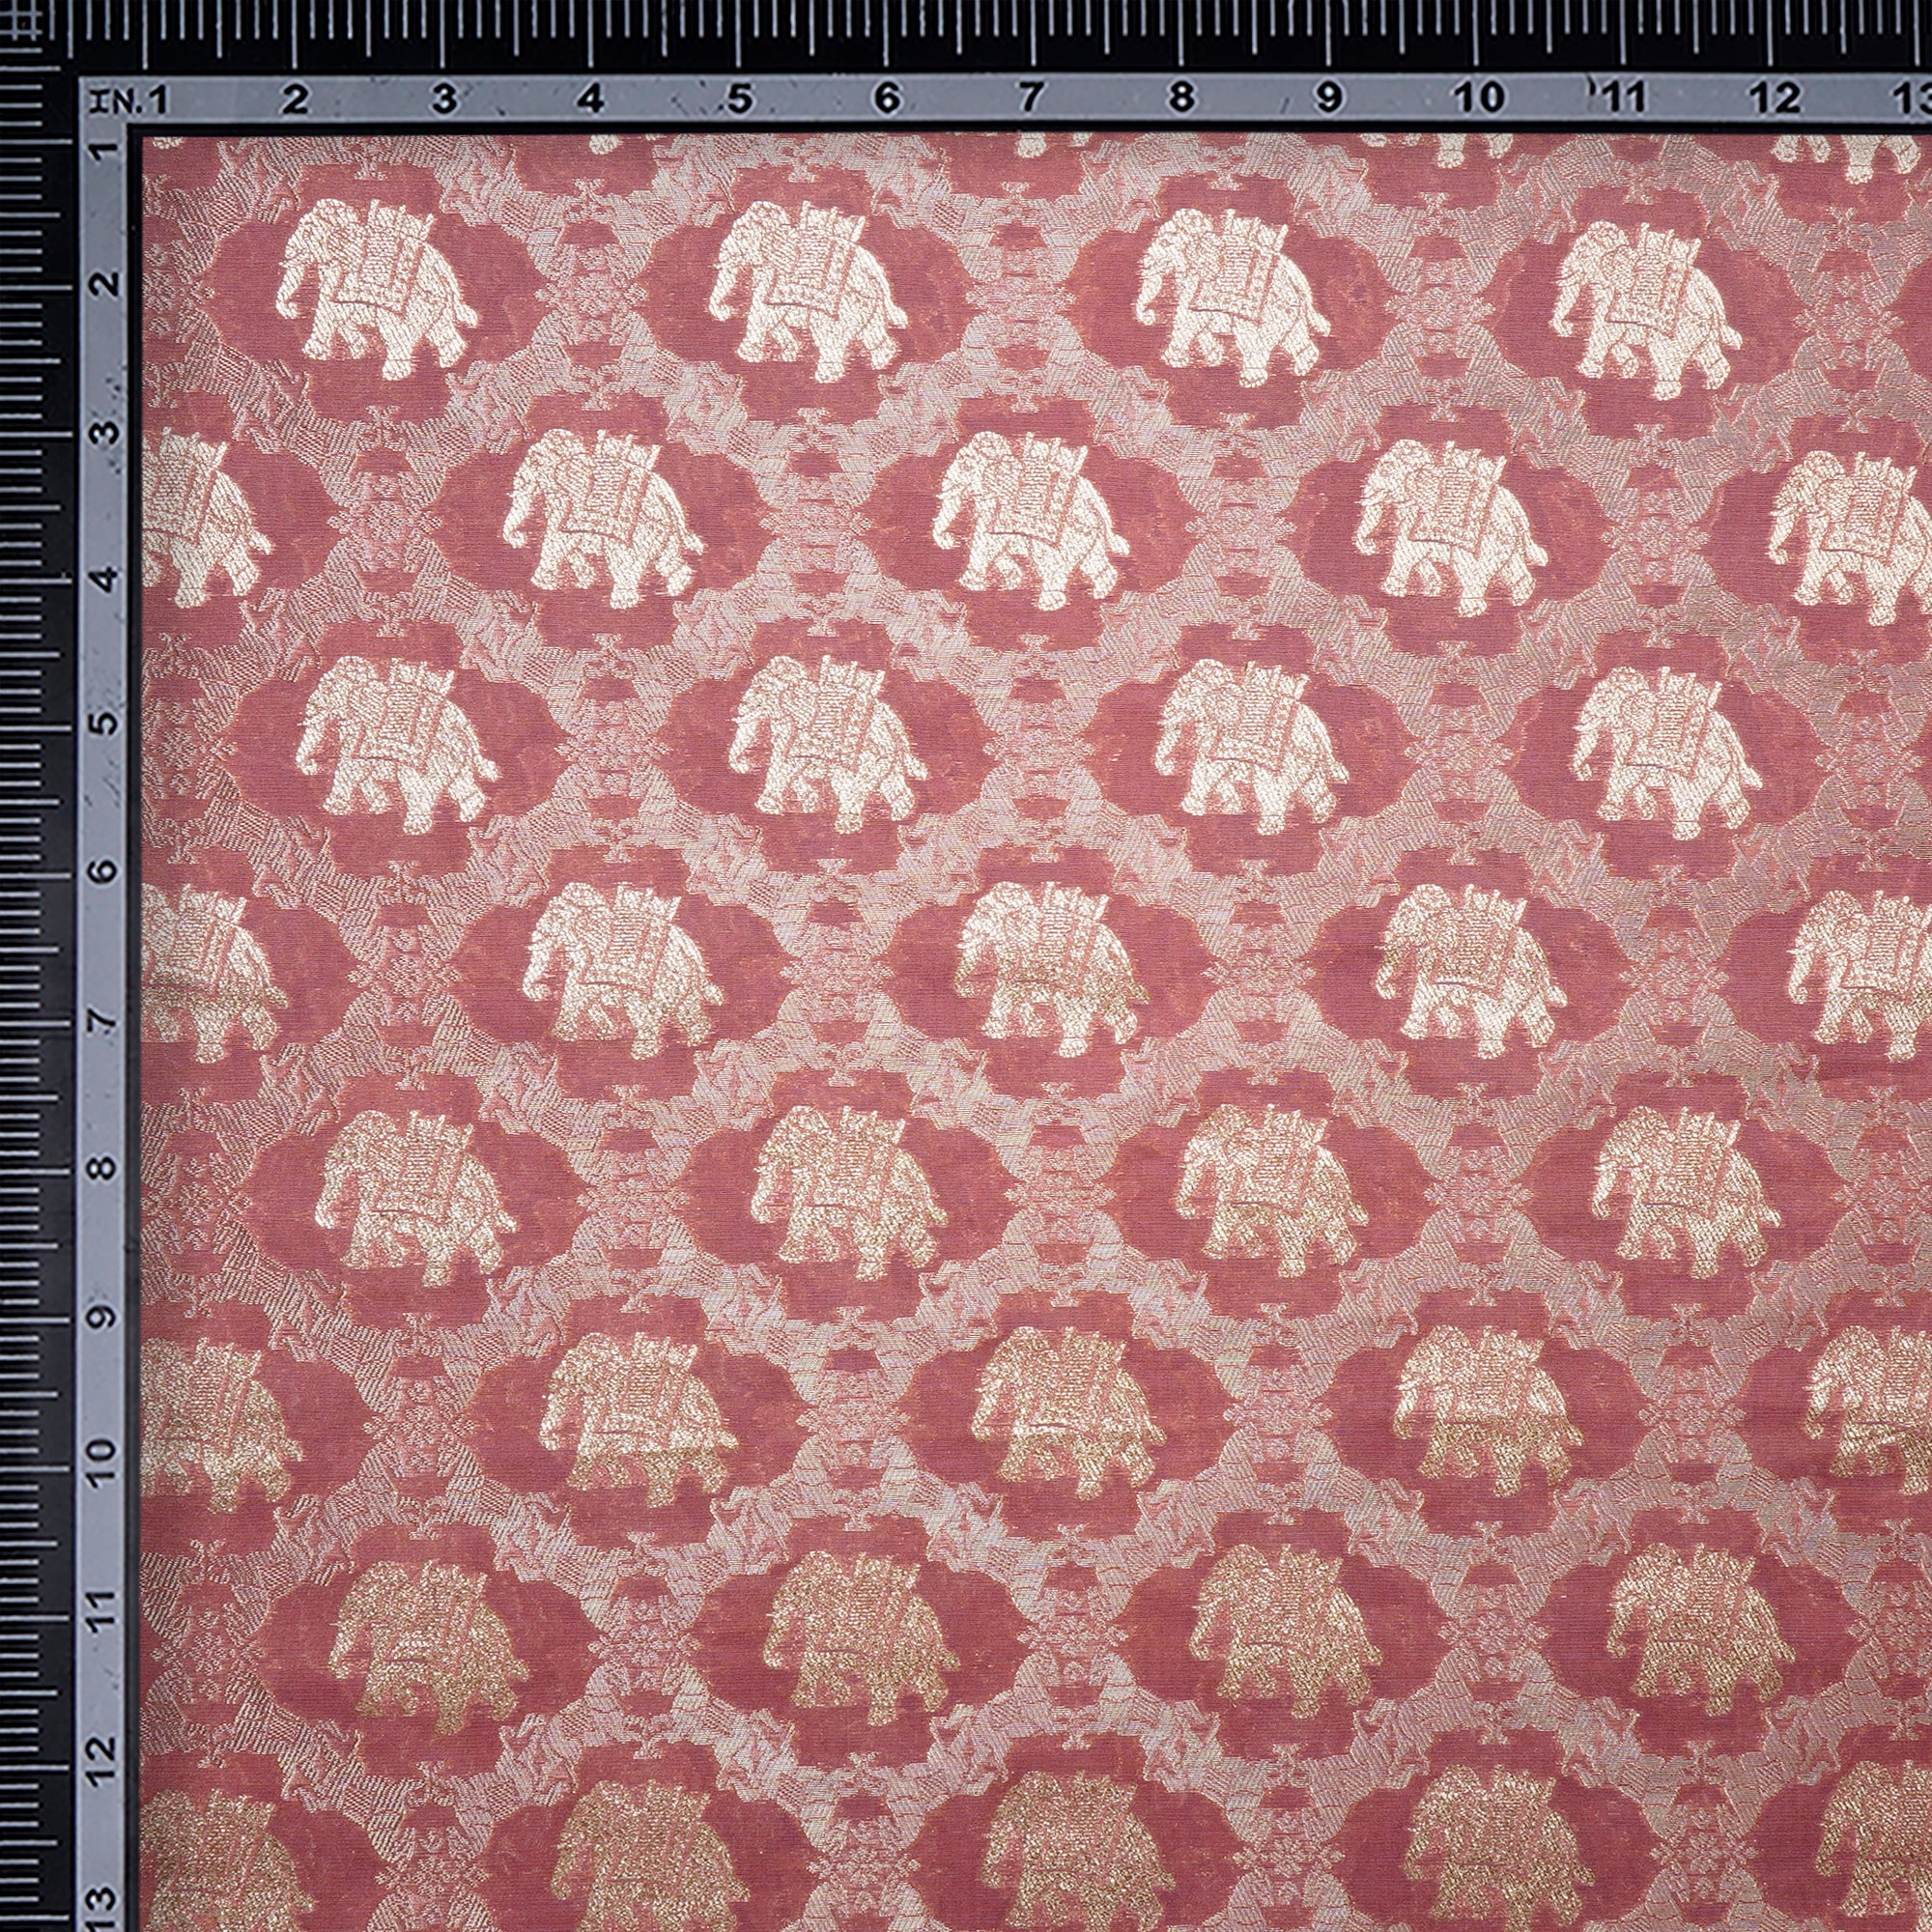 Mauveglow Traditional Pattern Blended Banarasi Brocade Fabric